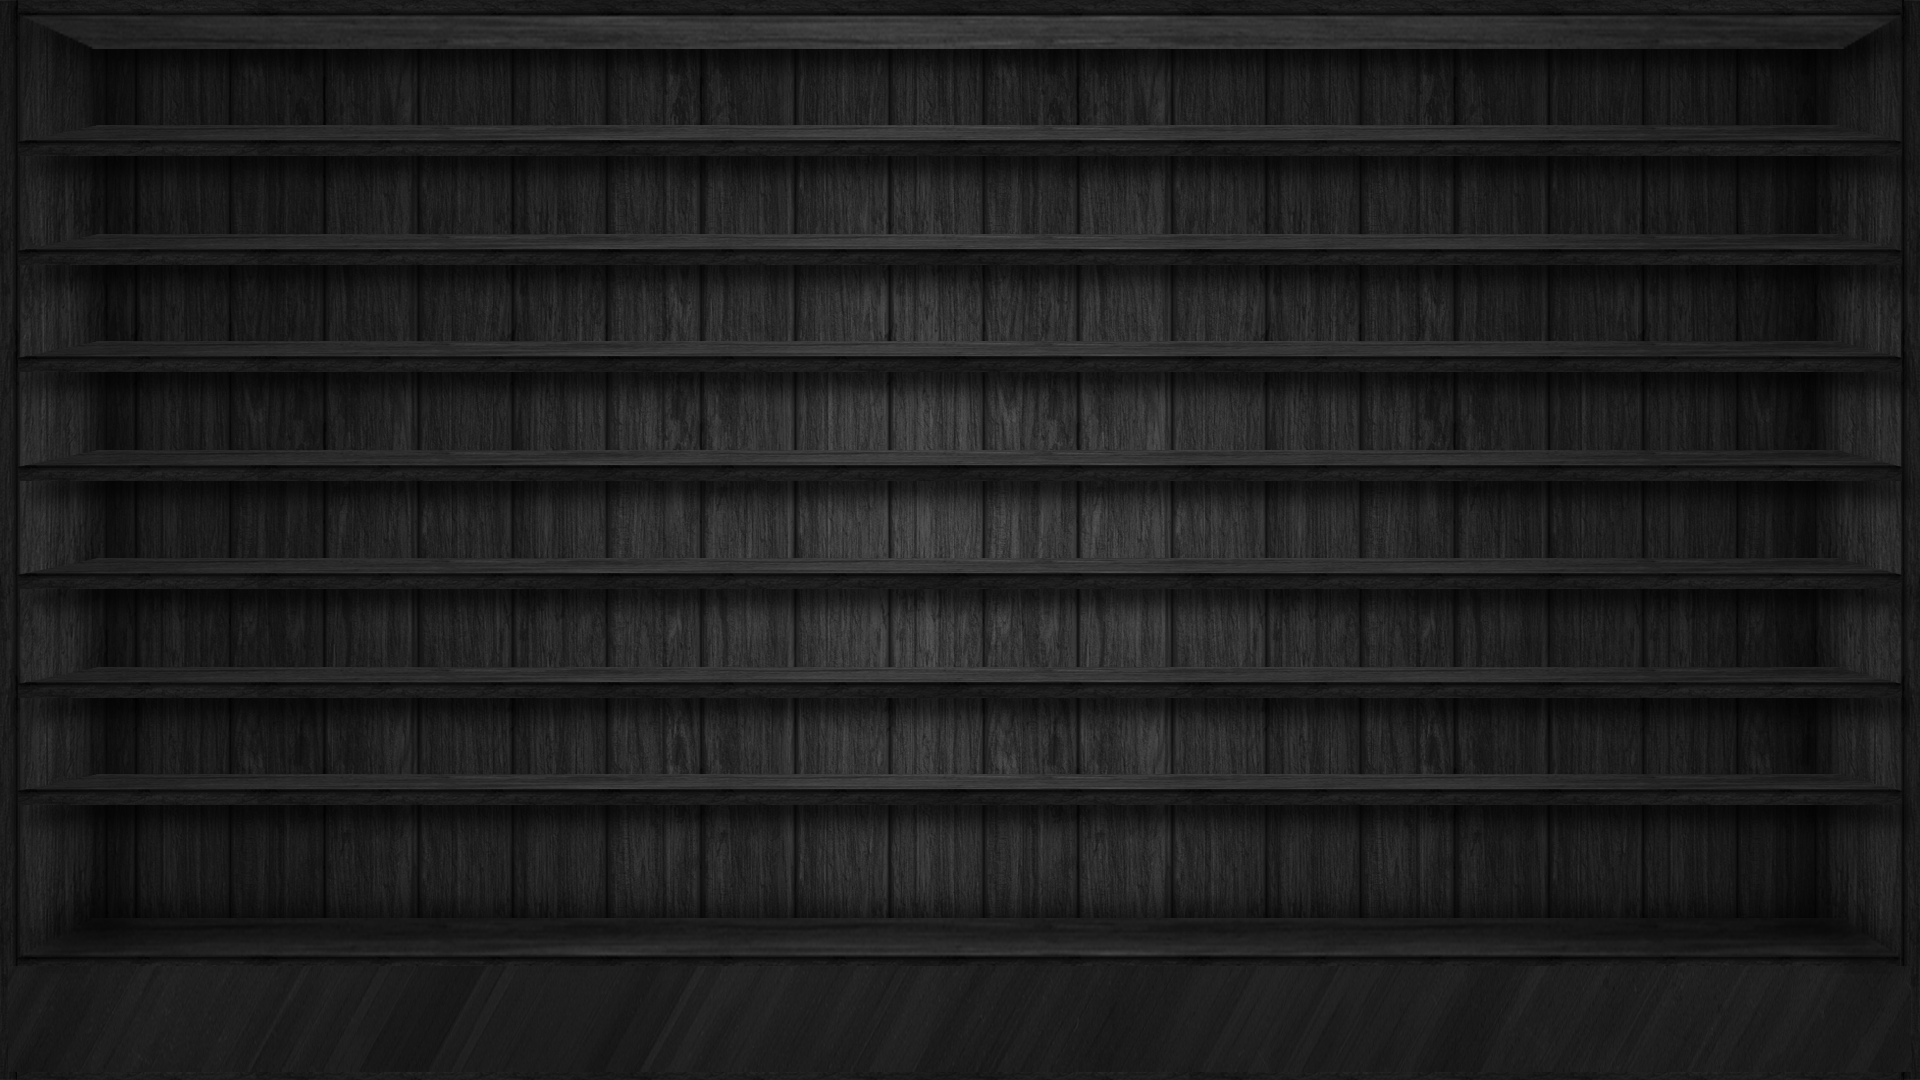 Empty Bookshelf Desktop HD Wallpaper 126264